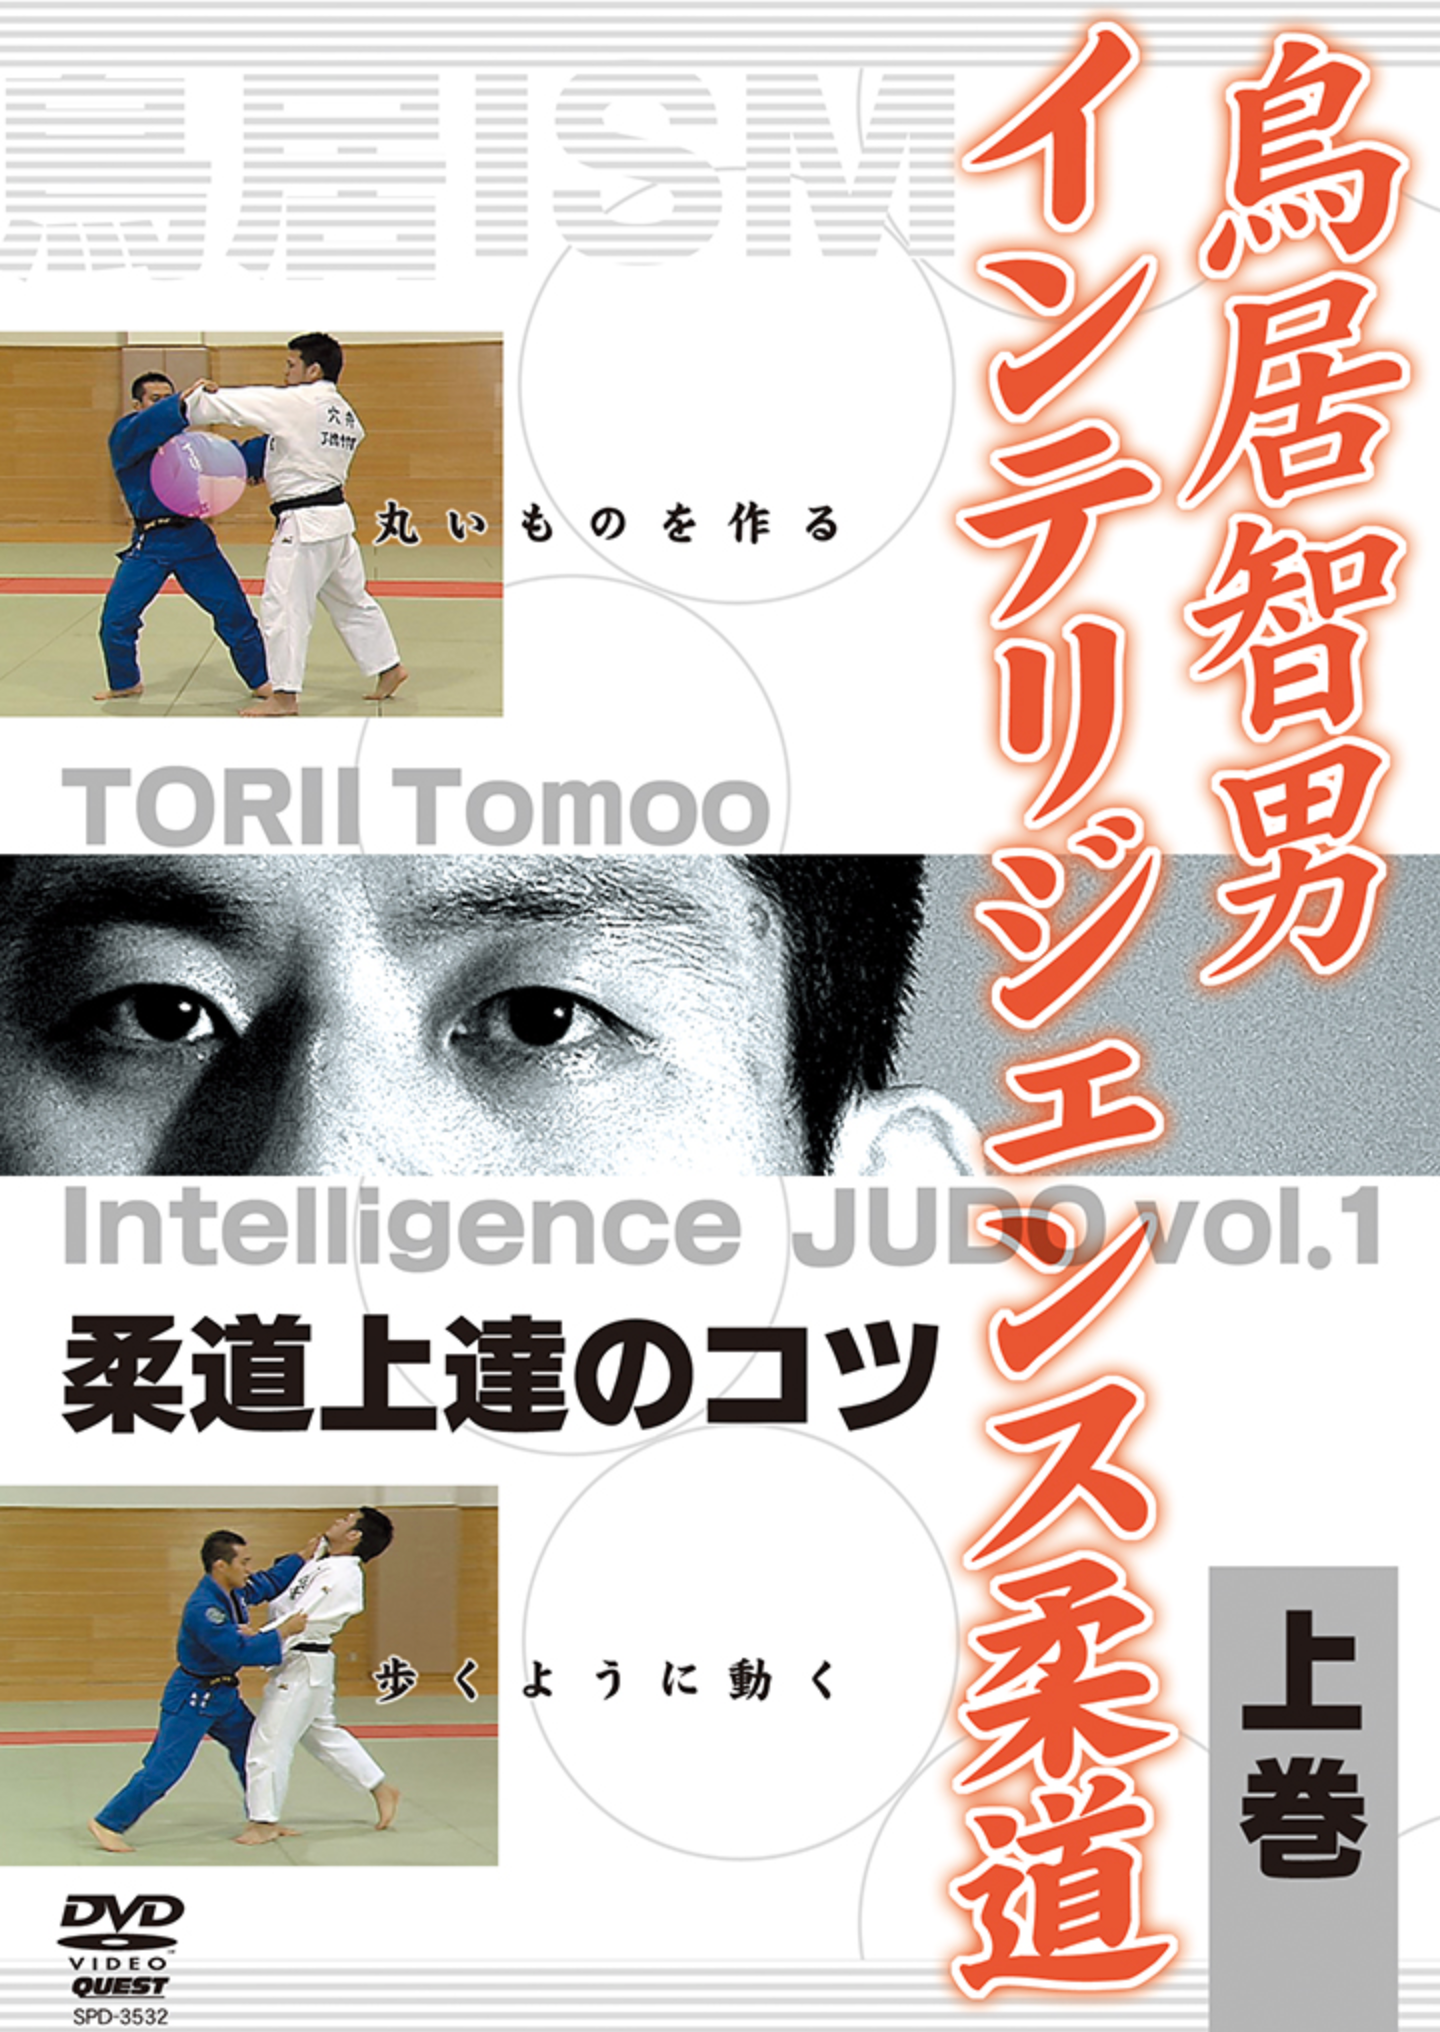 Intelligence Judo Tachiwaza DVD 1 with Tomoo Torii - Budovideos Inc